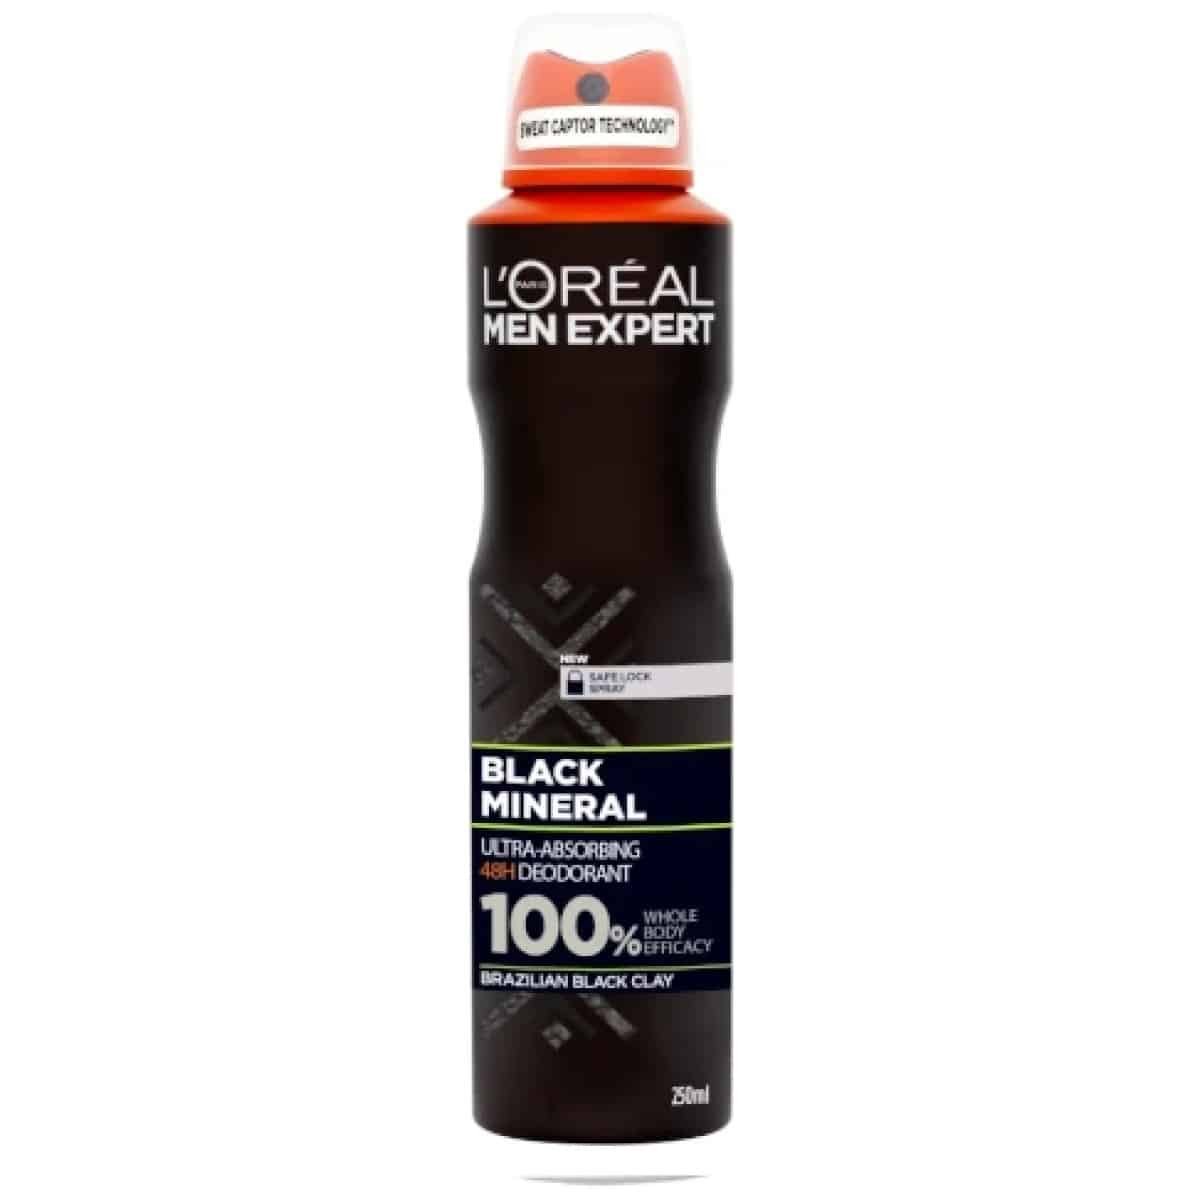 LOreal Men Expert black mineral Deodorant